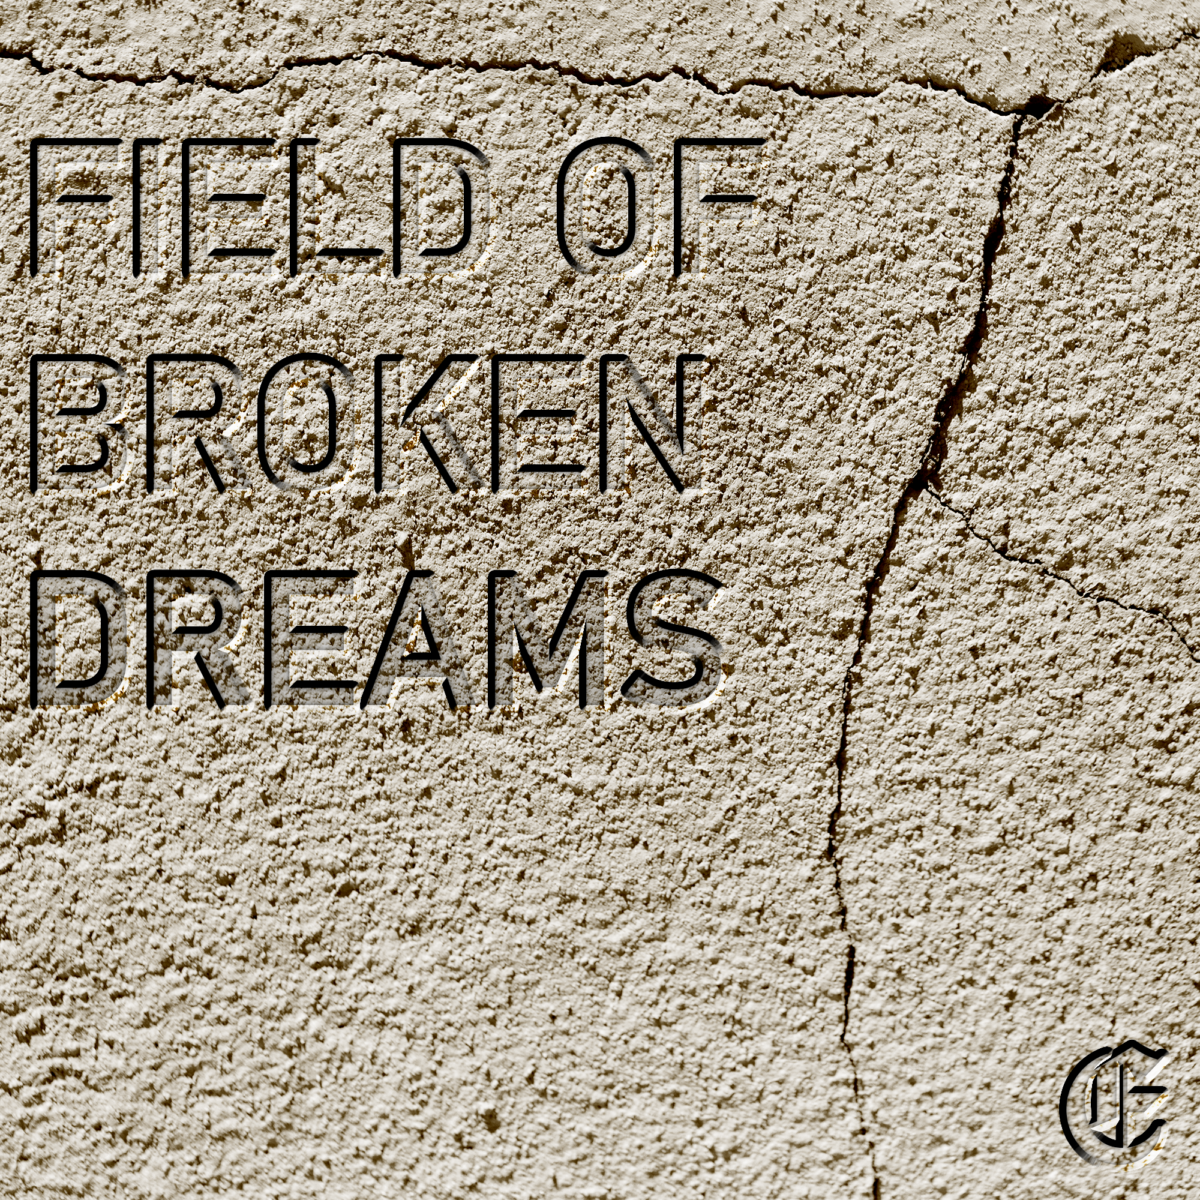 The Field of Broken Dreams | Episode 8: The Reaction